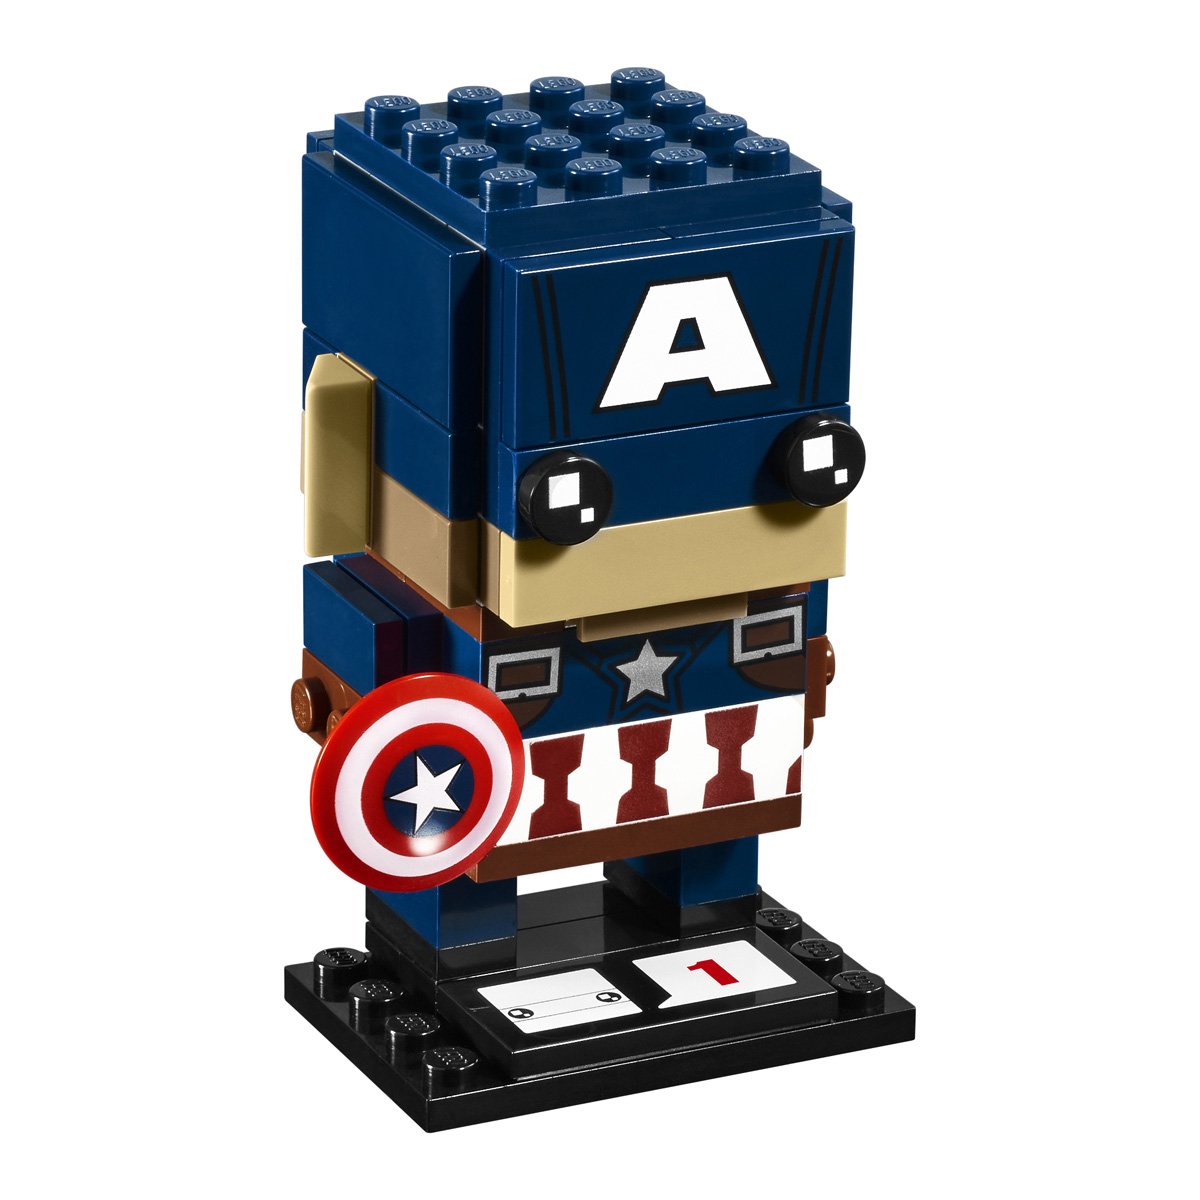 Brickheadz Captain America Lego